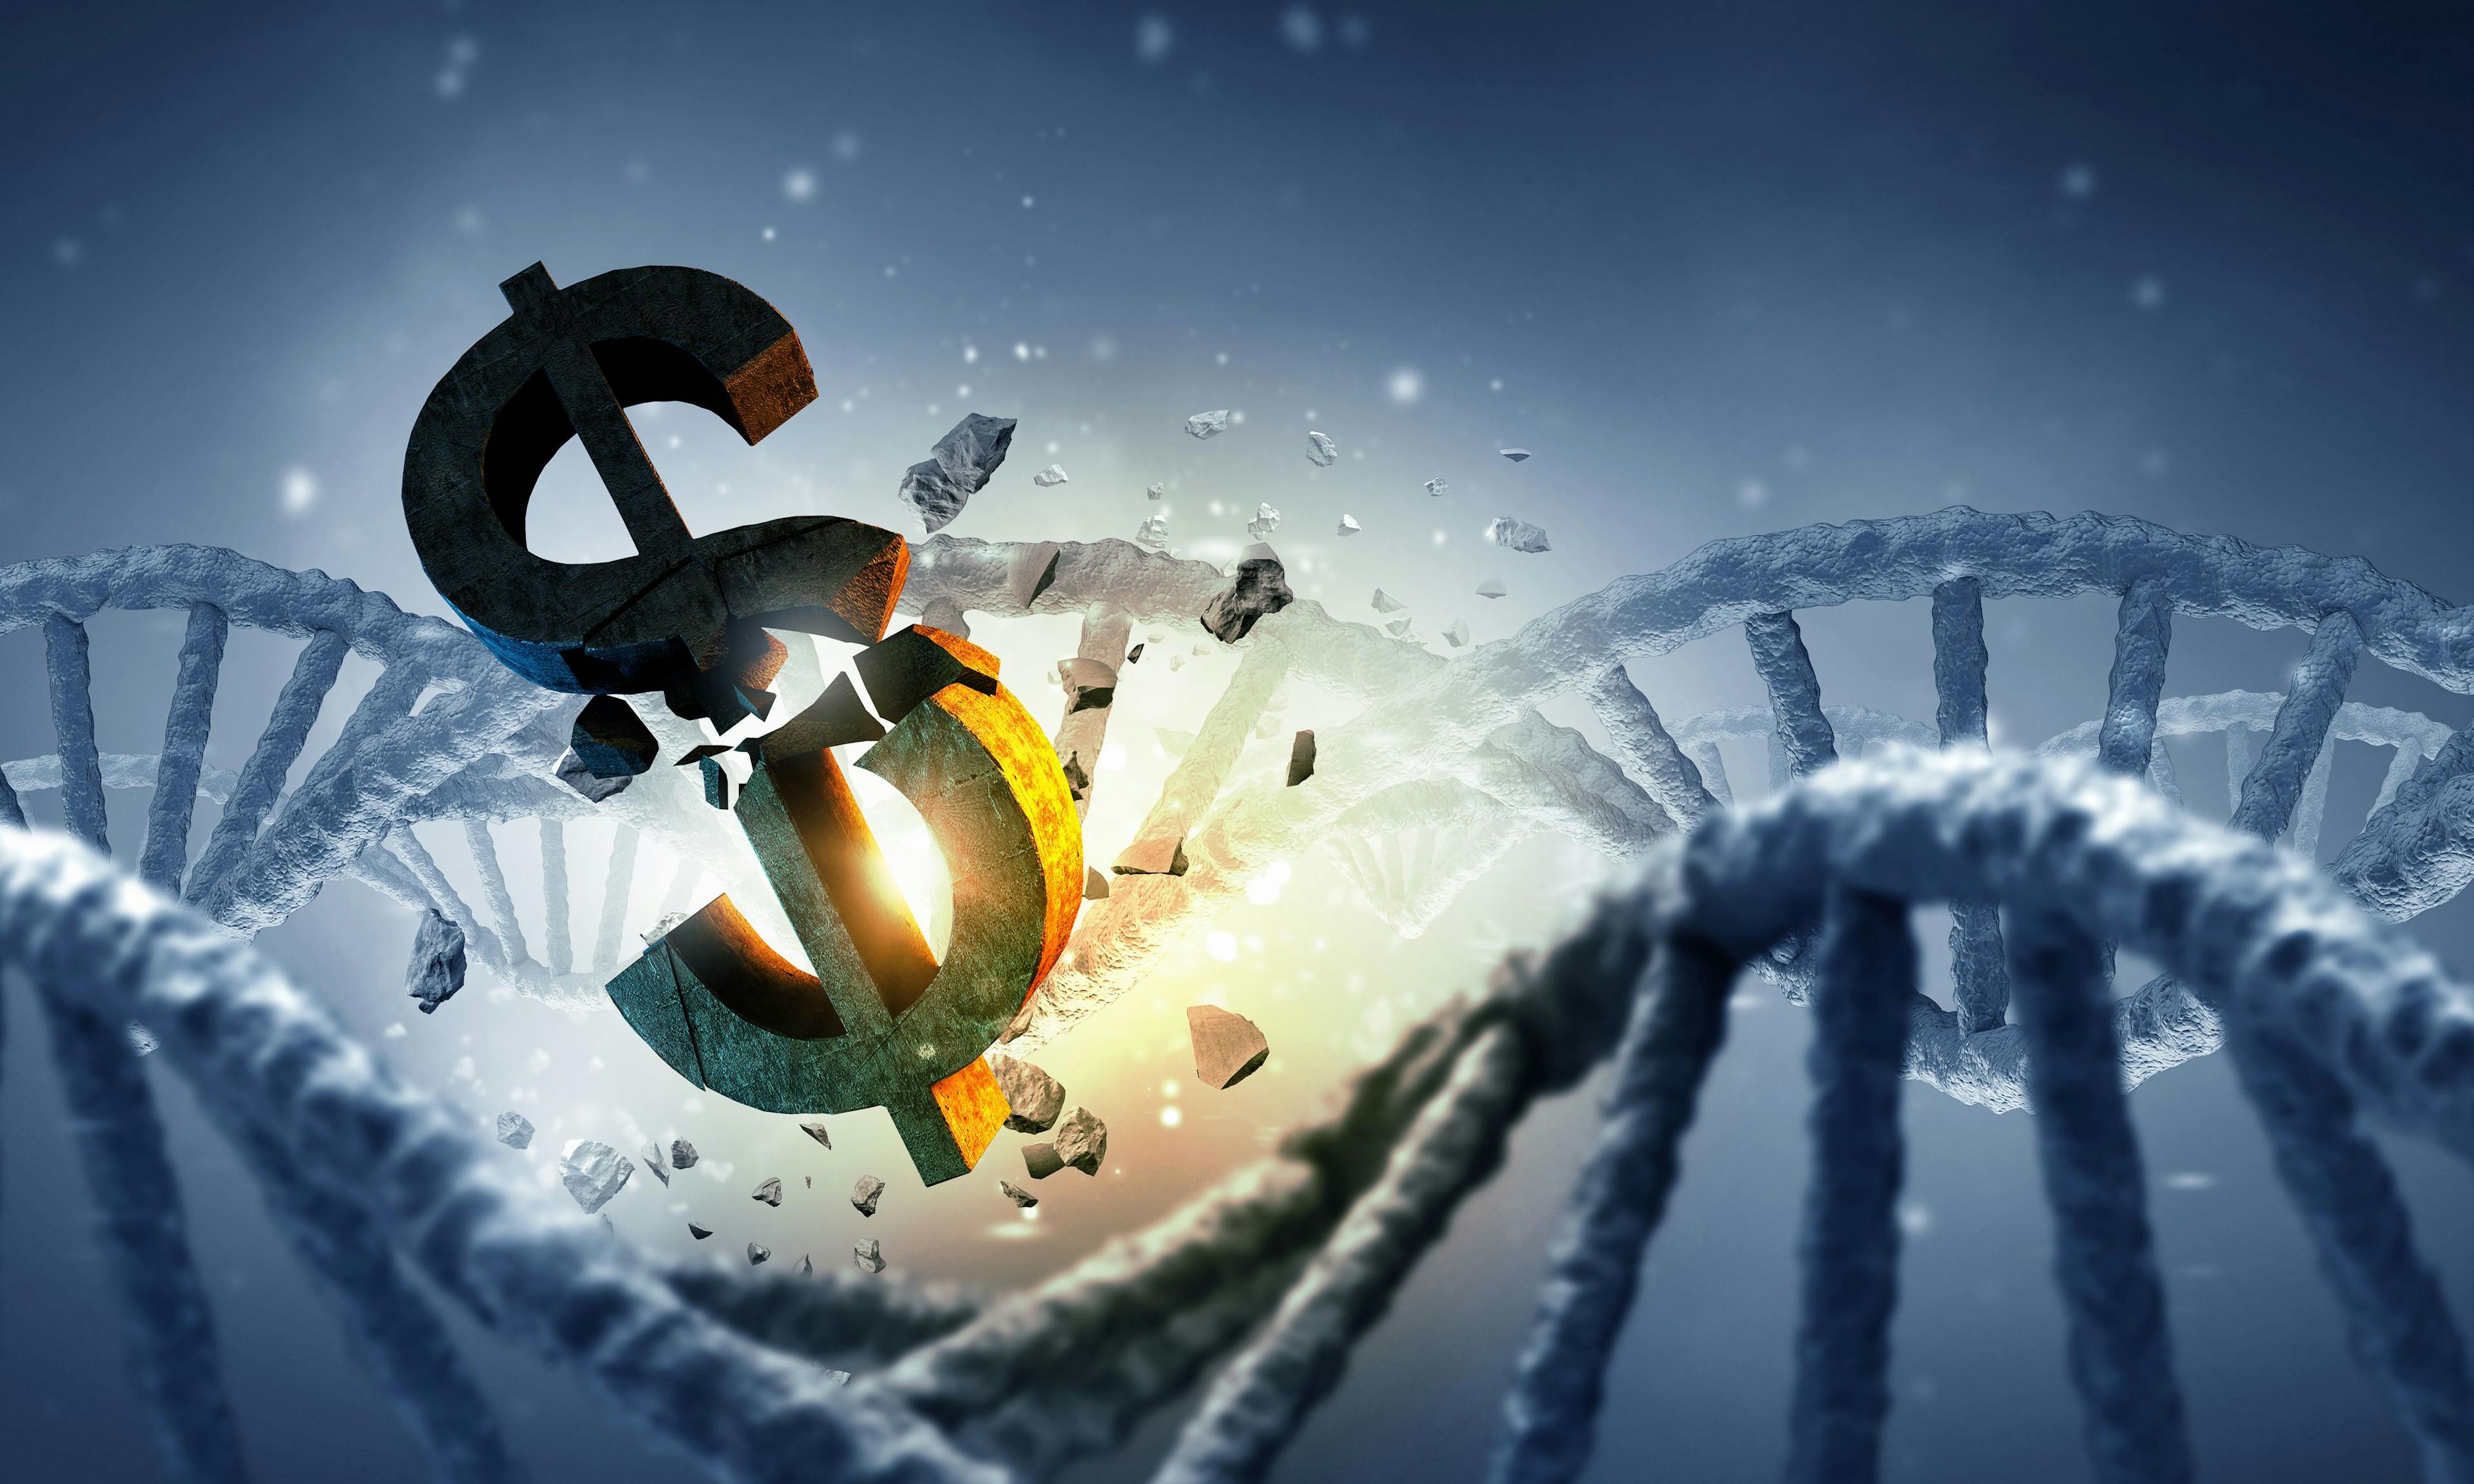 DNA molecule and dollar sign | Image Credit: Sergey Nivens-stock.adobe.com